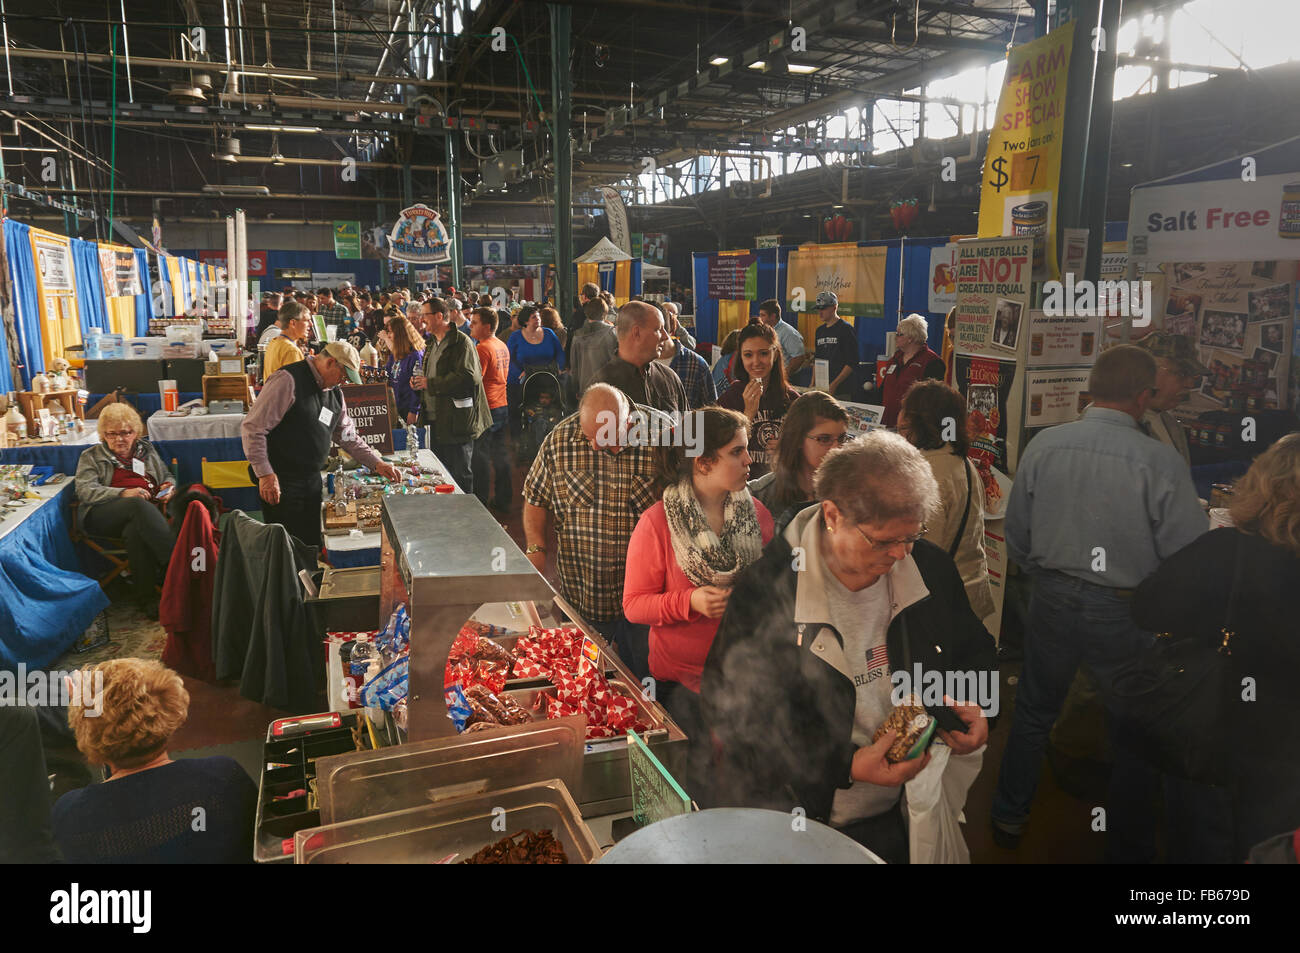 Artisan Foods Exhibit Hall, Pennsylvania Farm Show, Harrisburg, PA, USA Stock Photo